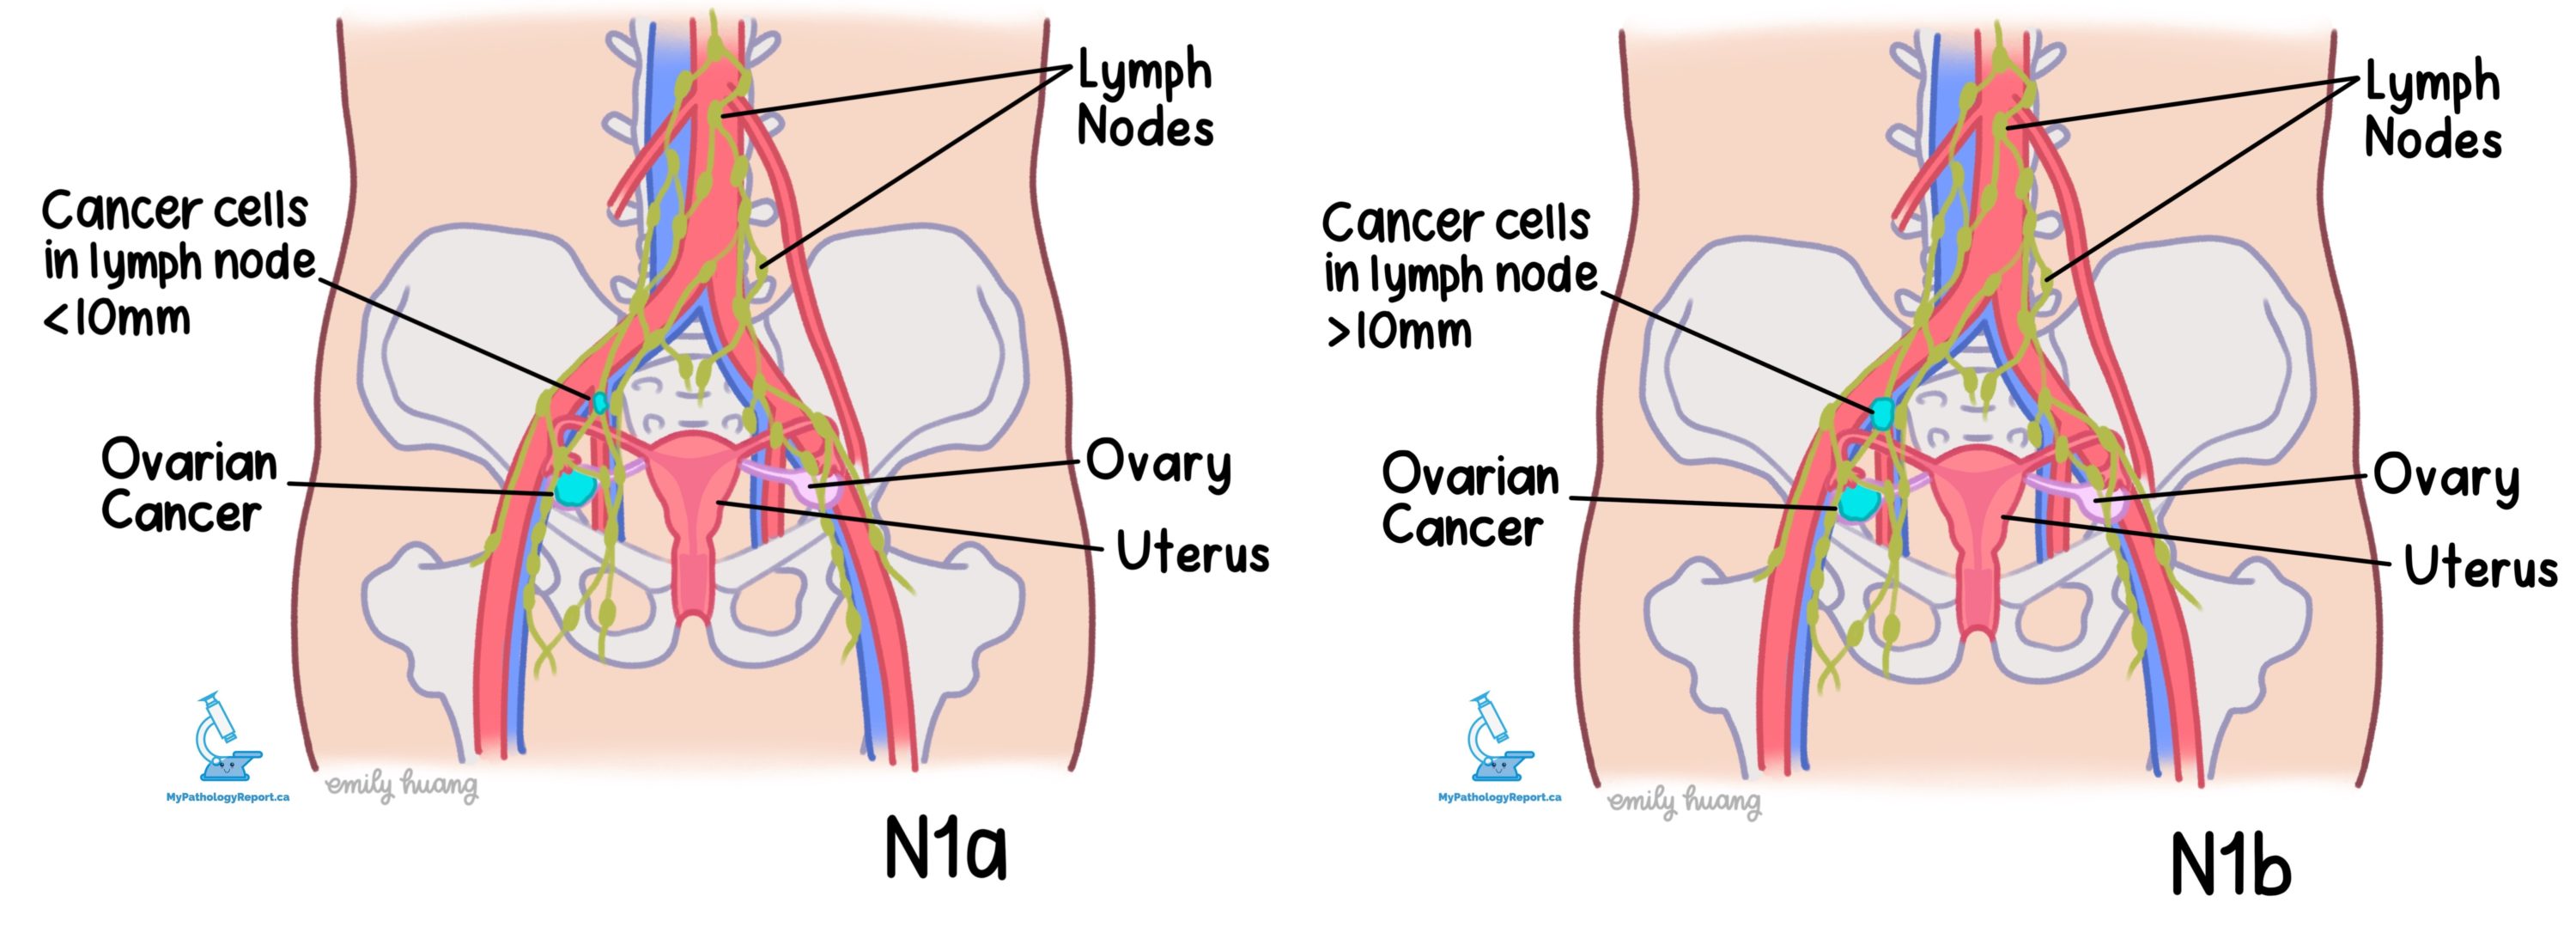 Ovary cancer nodal stage